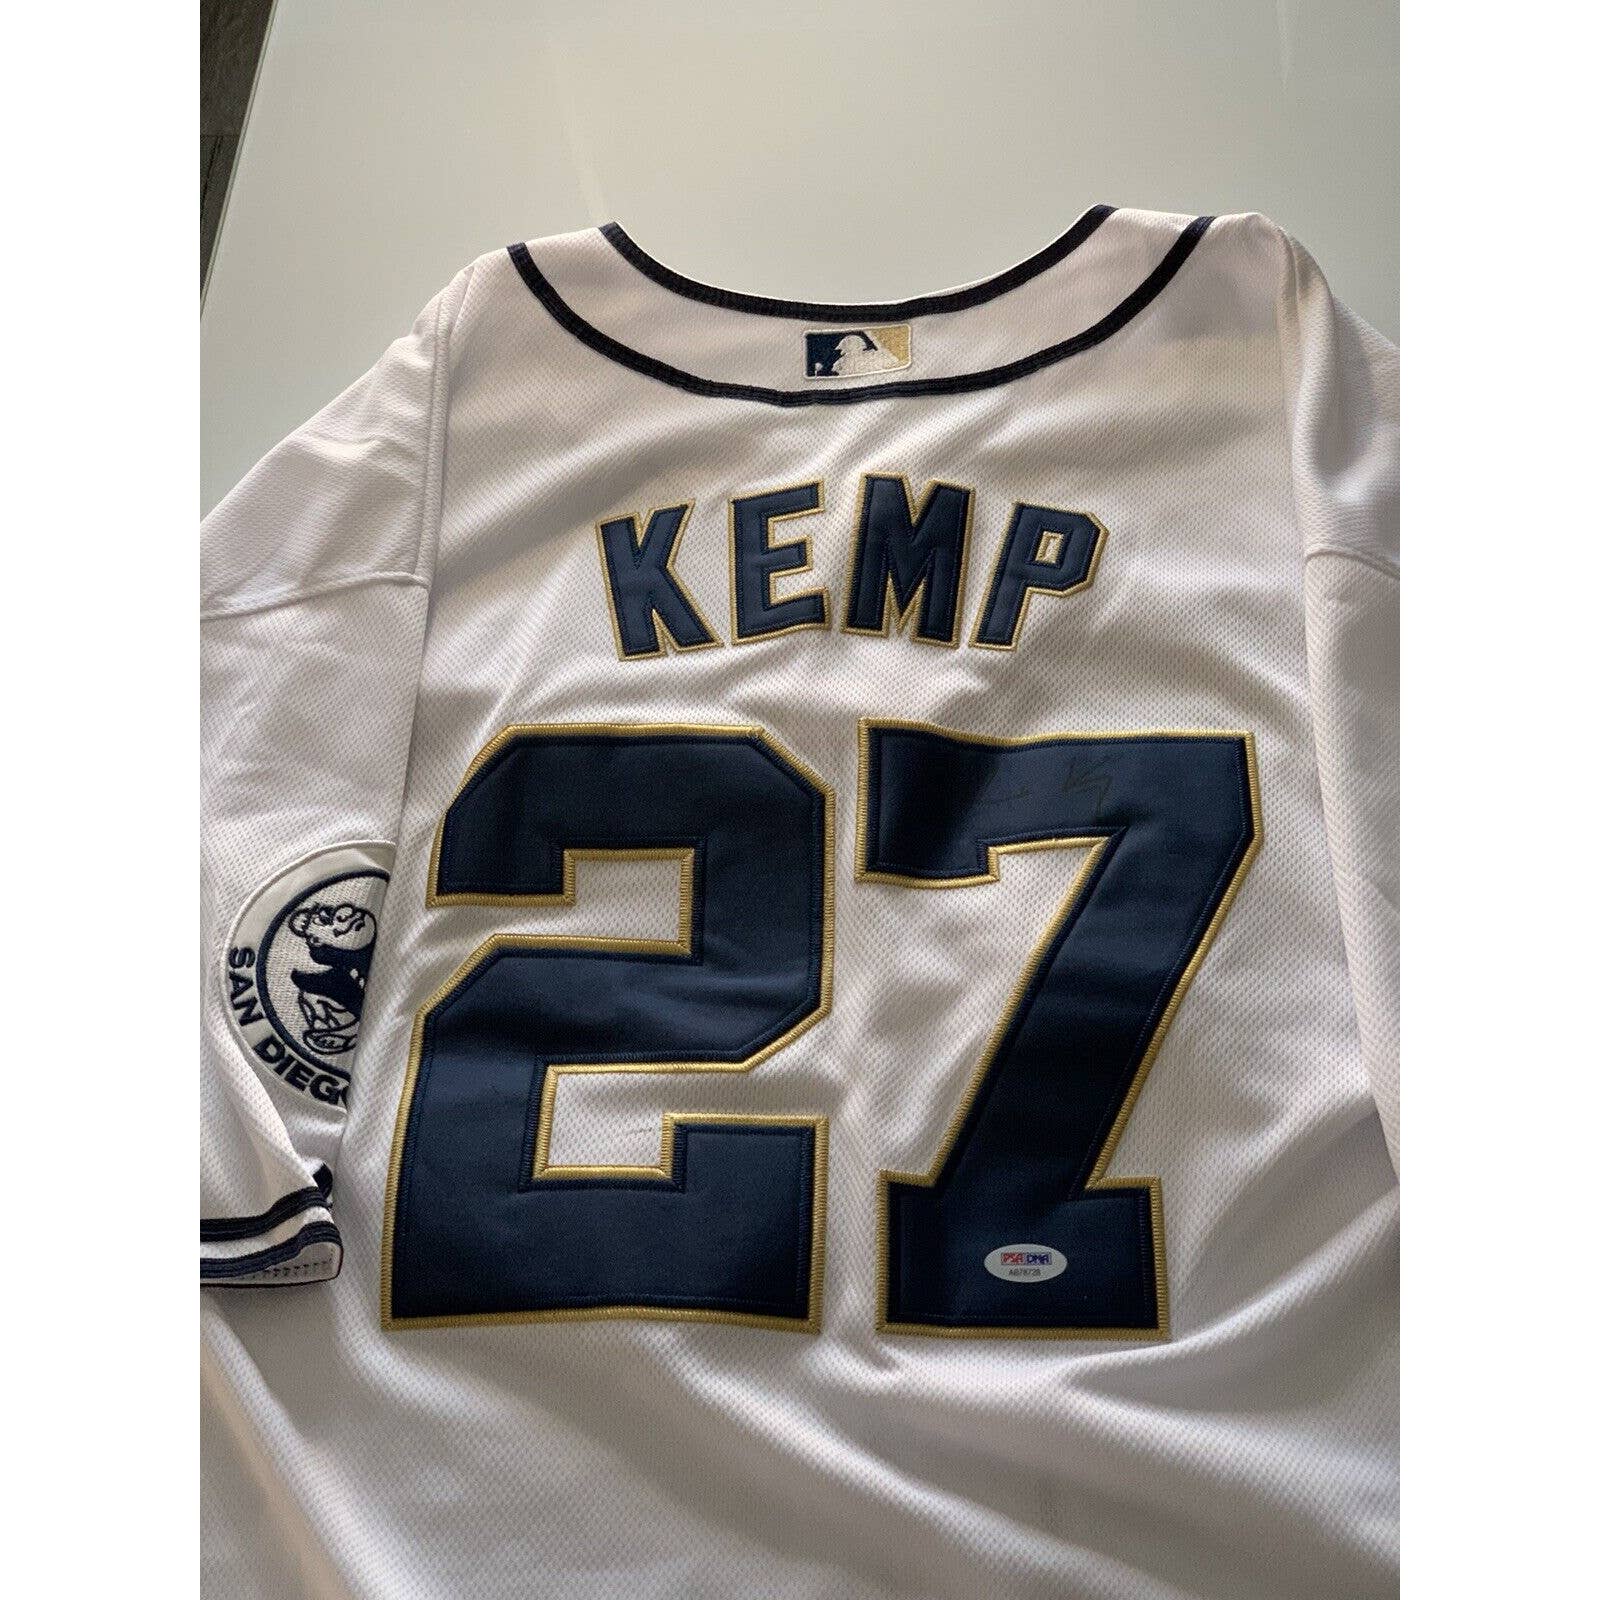 Matt Kemp Autographed/Signed Jersey San Diego Padres PLEASE READ - TreasuresEvolved